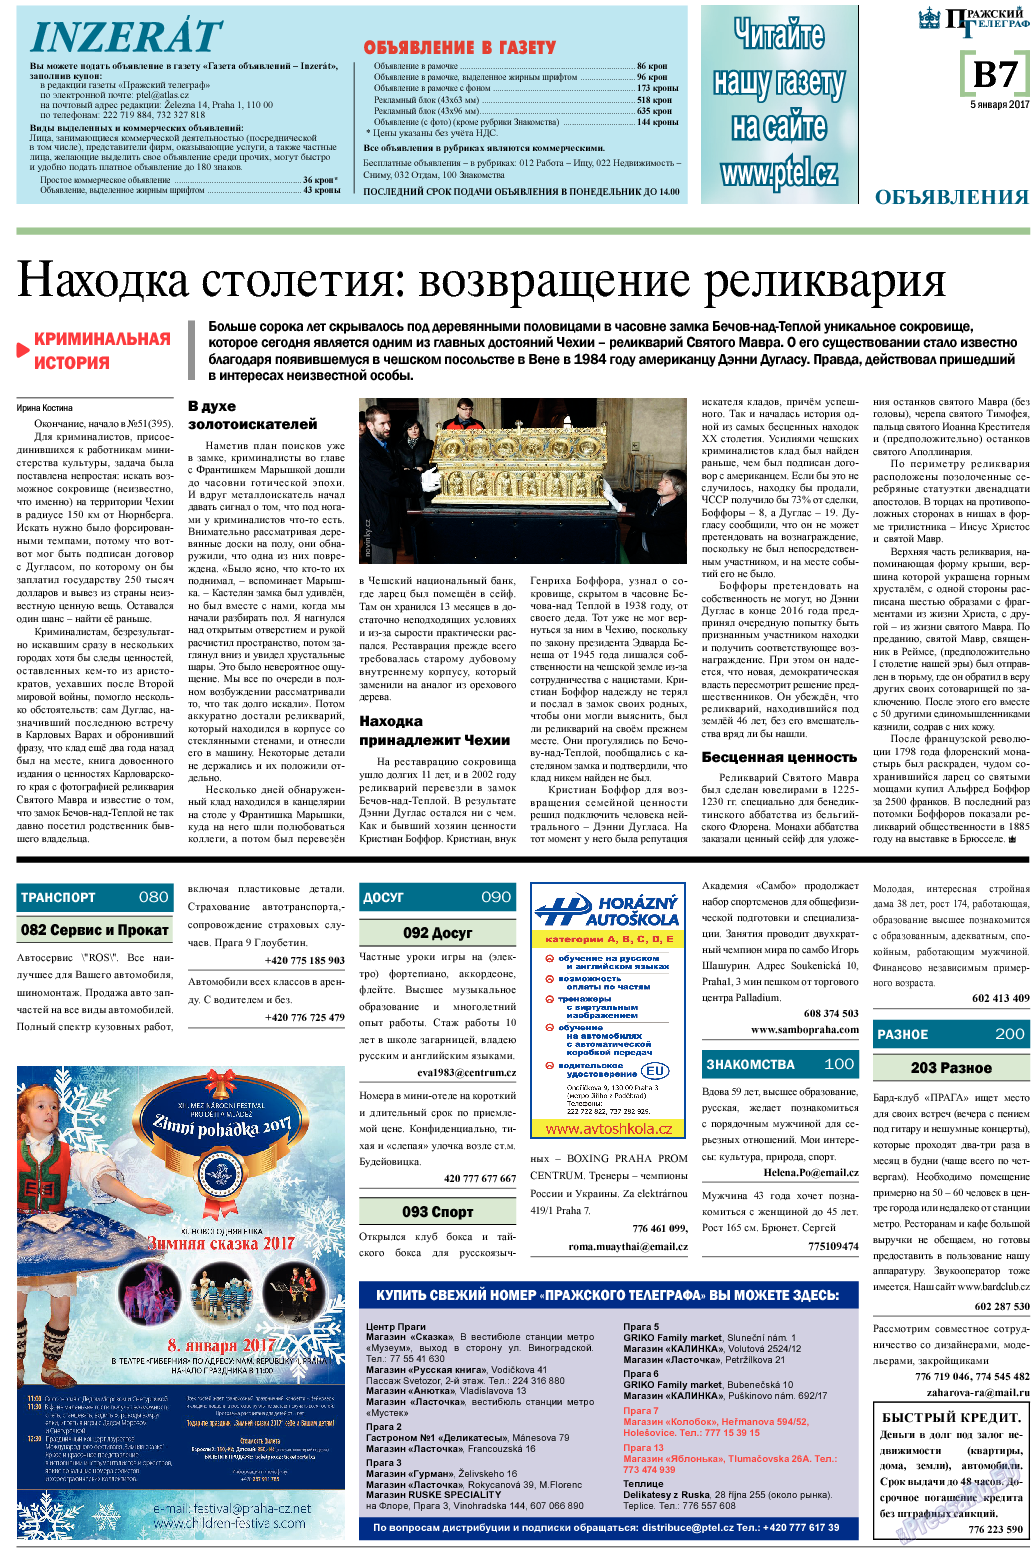 Пражский телеграф, газета. 2017 №1 стр.15